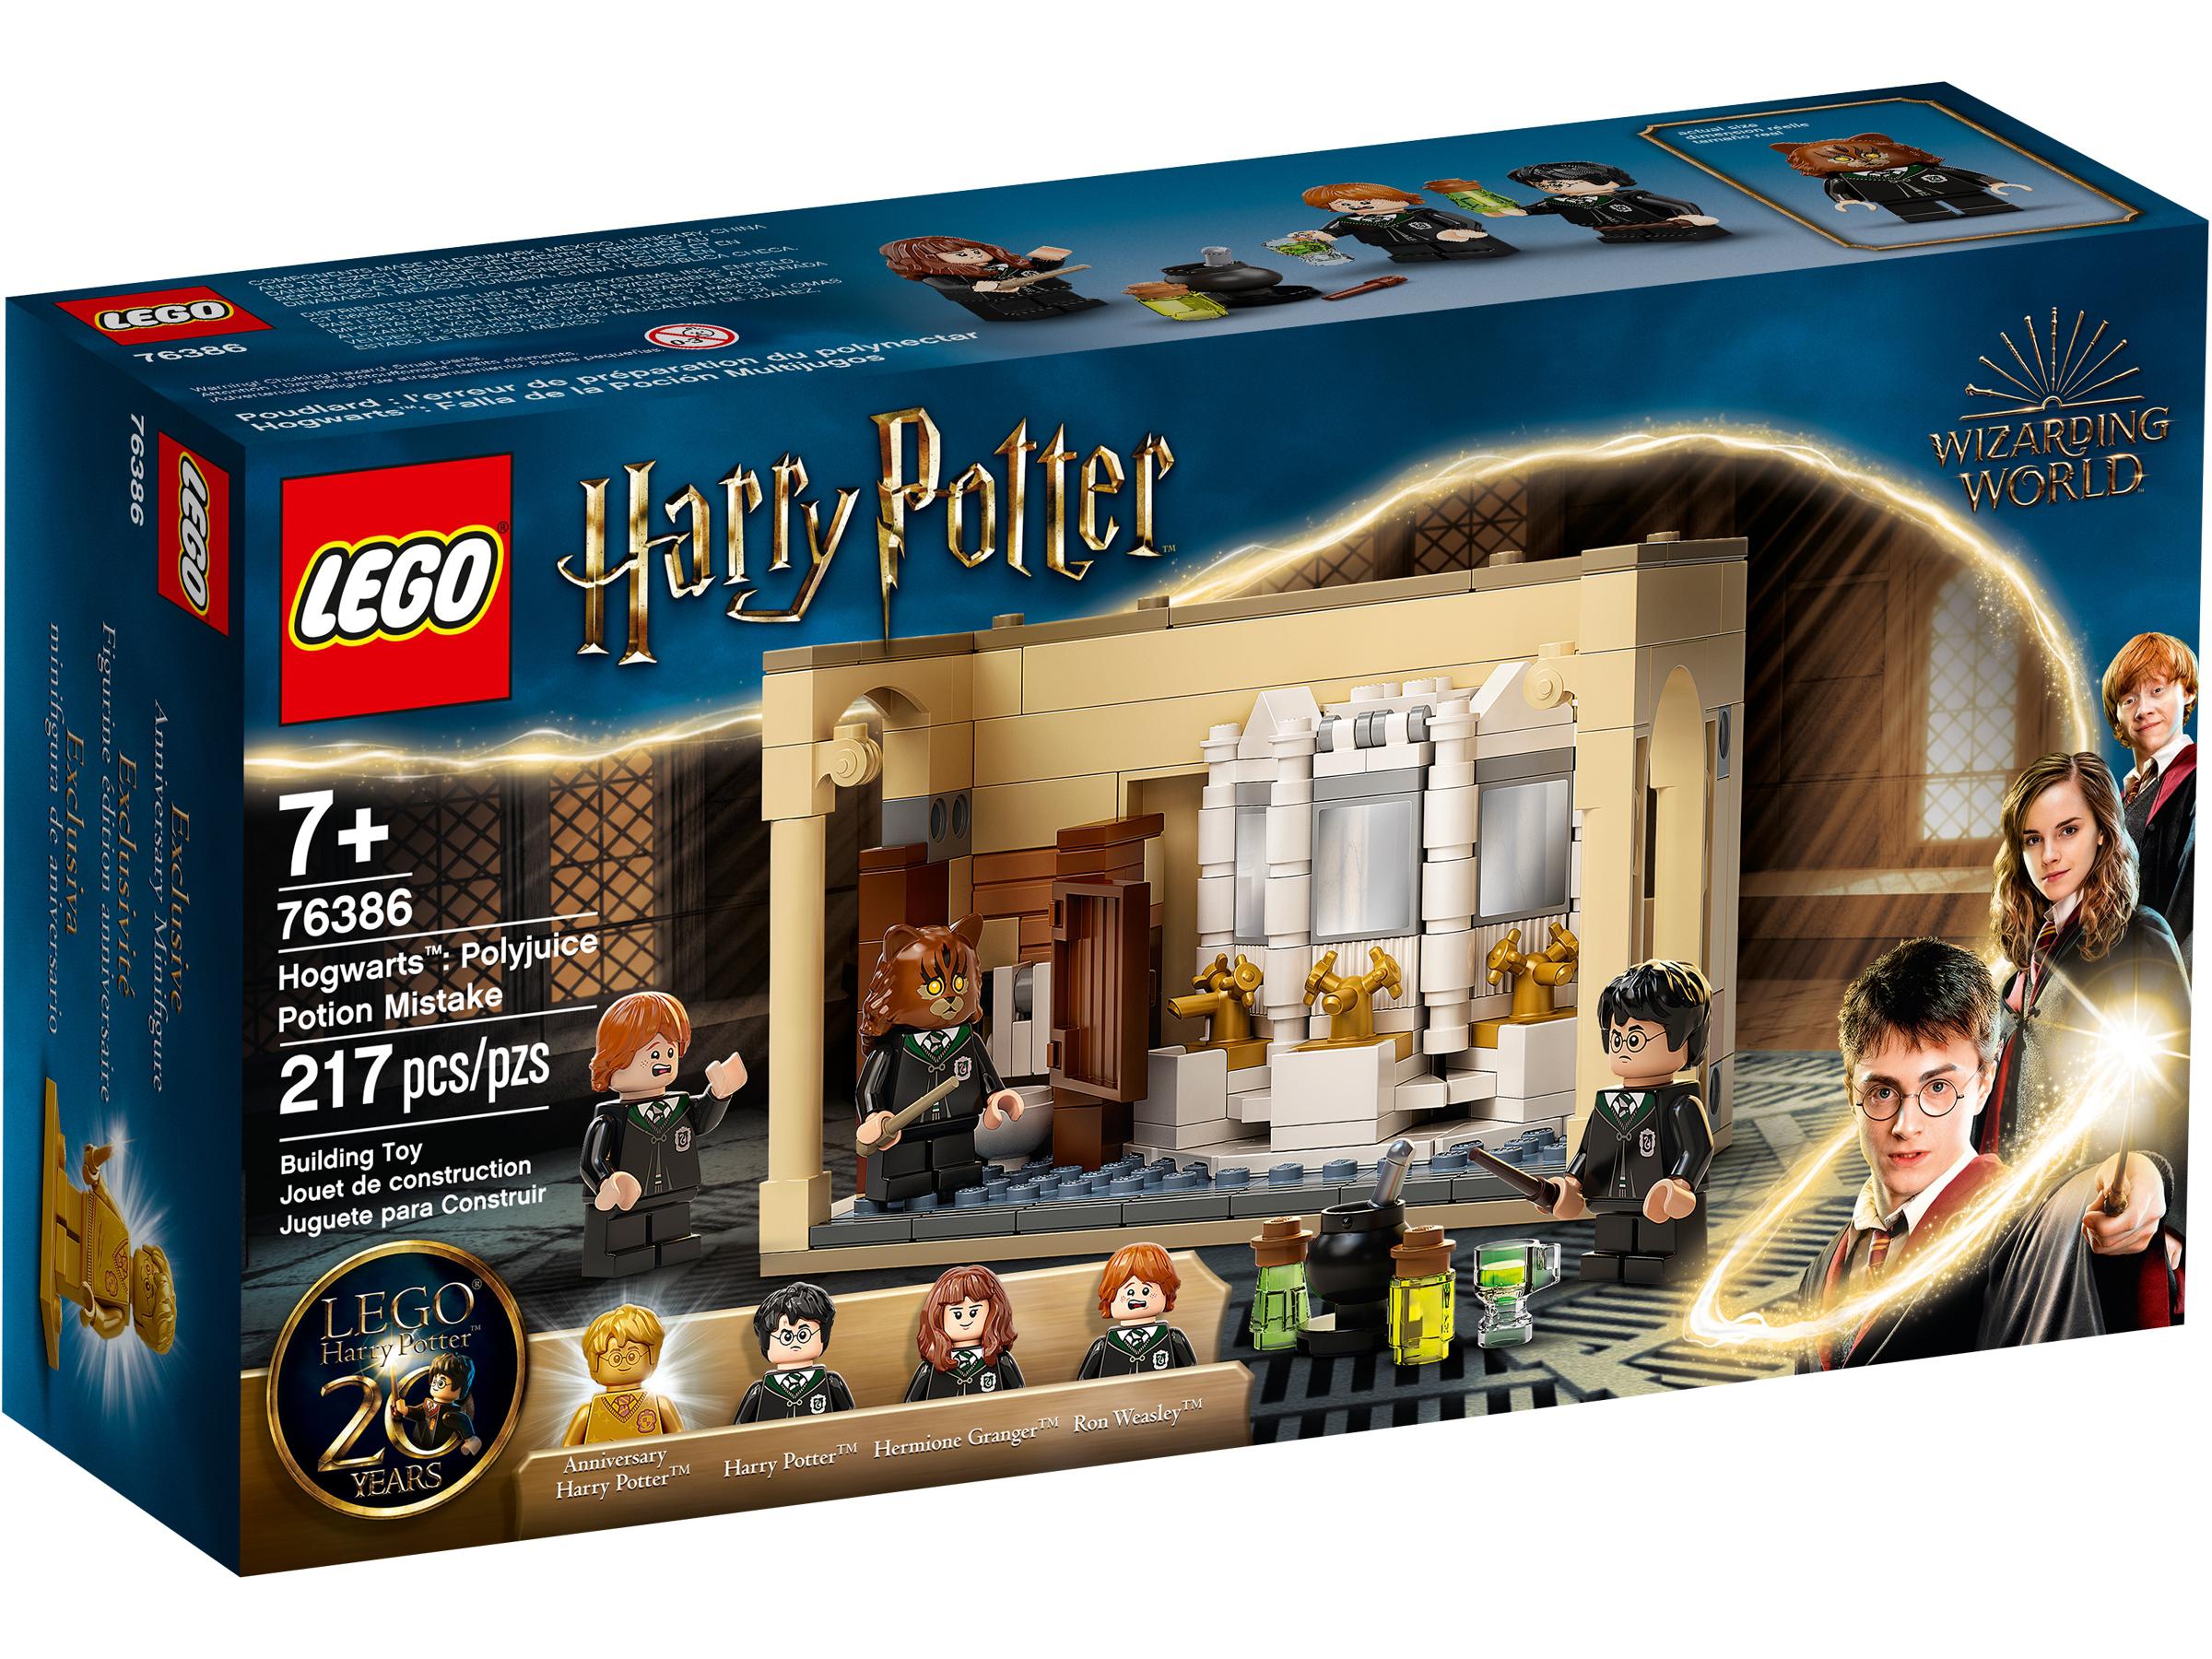 Hogwarts: Polyjuice Potion Mistake Display Case for LEGO 76386